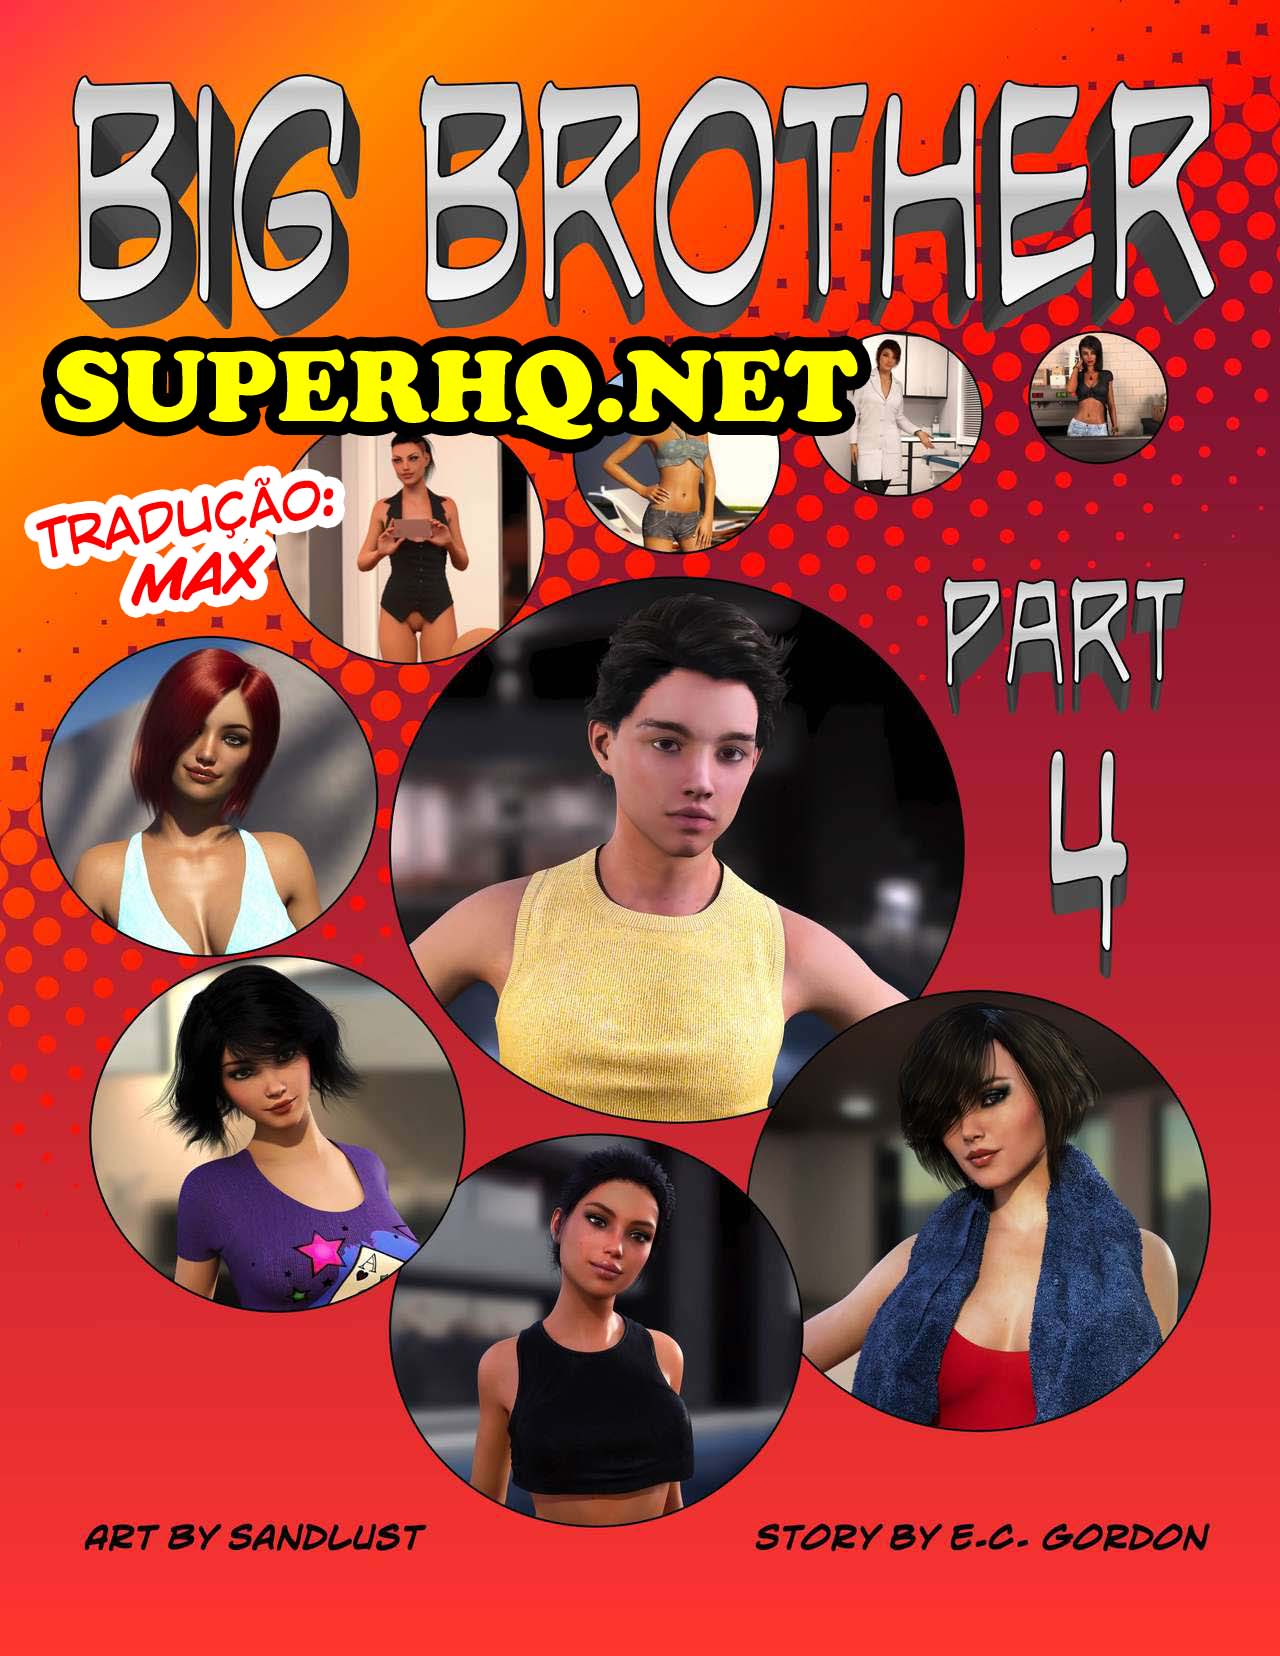 Big Brother 4